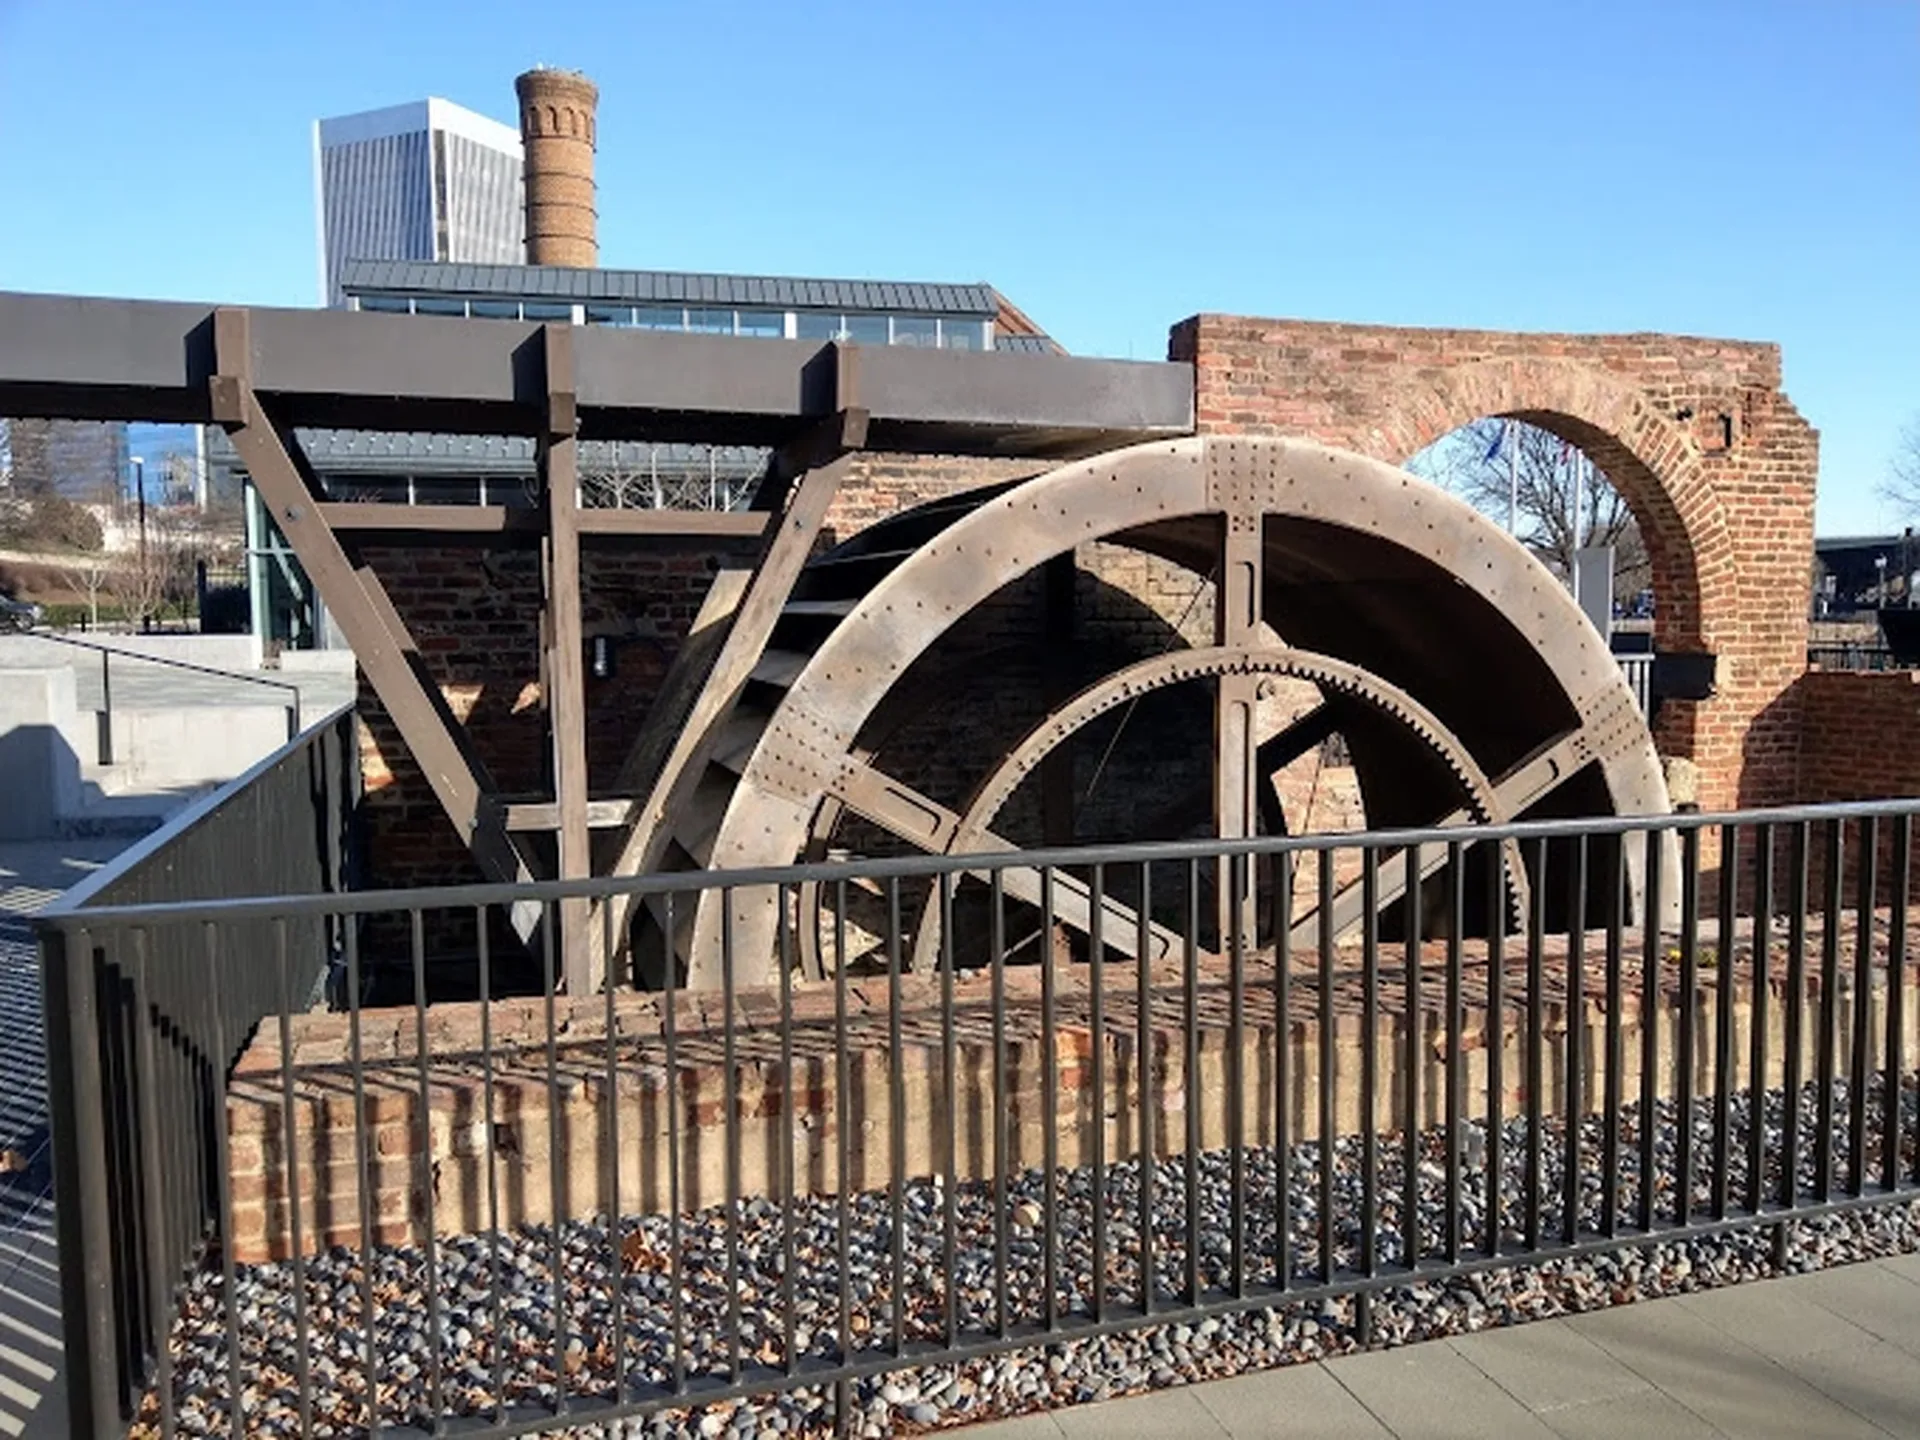 Tredegar Iron Works & American Civil War Museum- Historic Tredegar